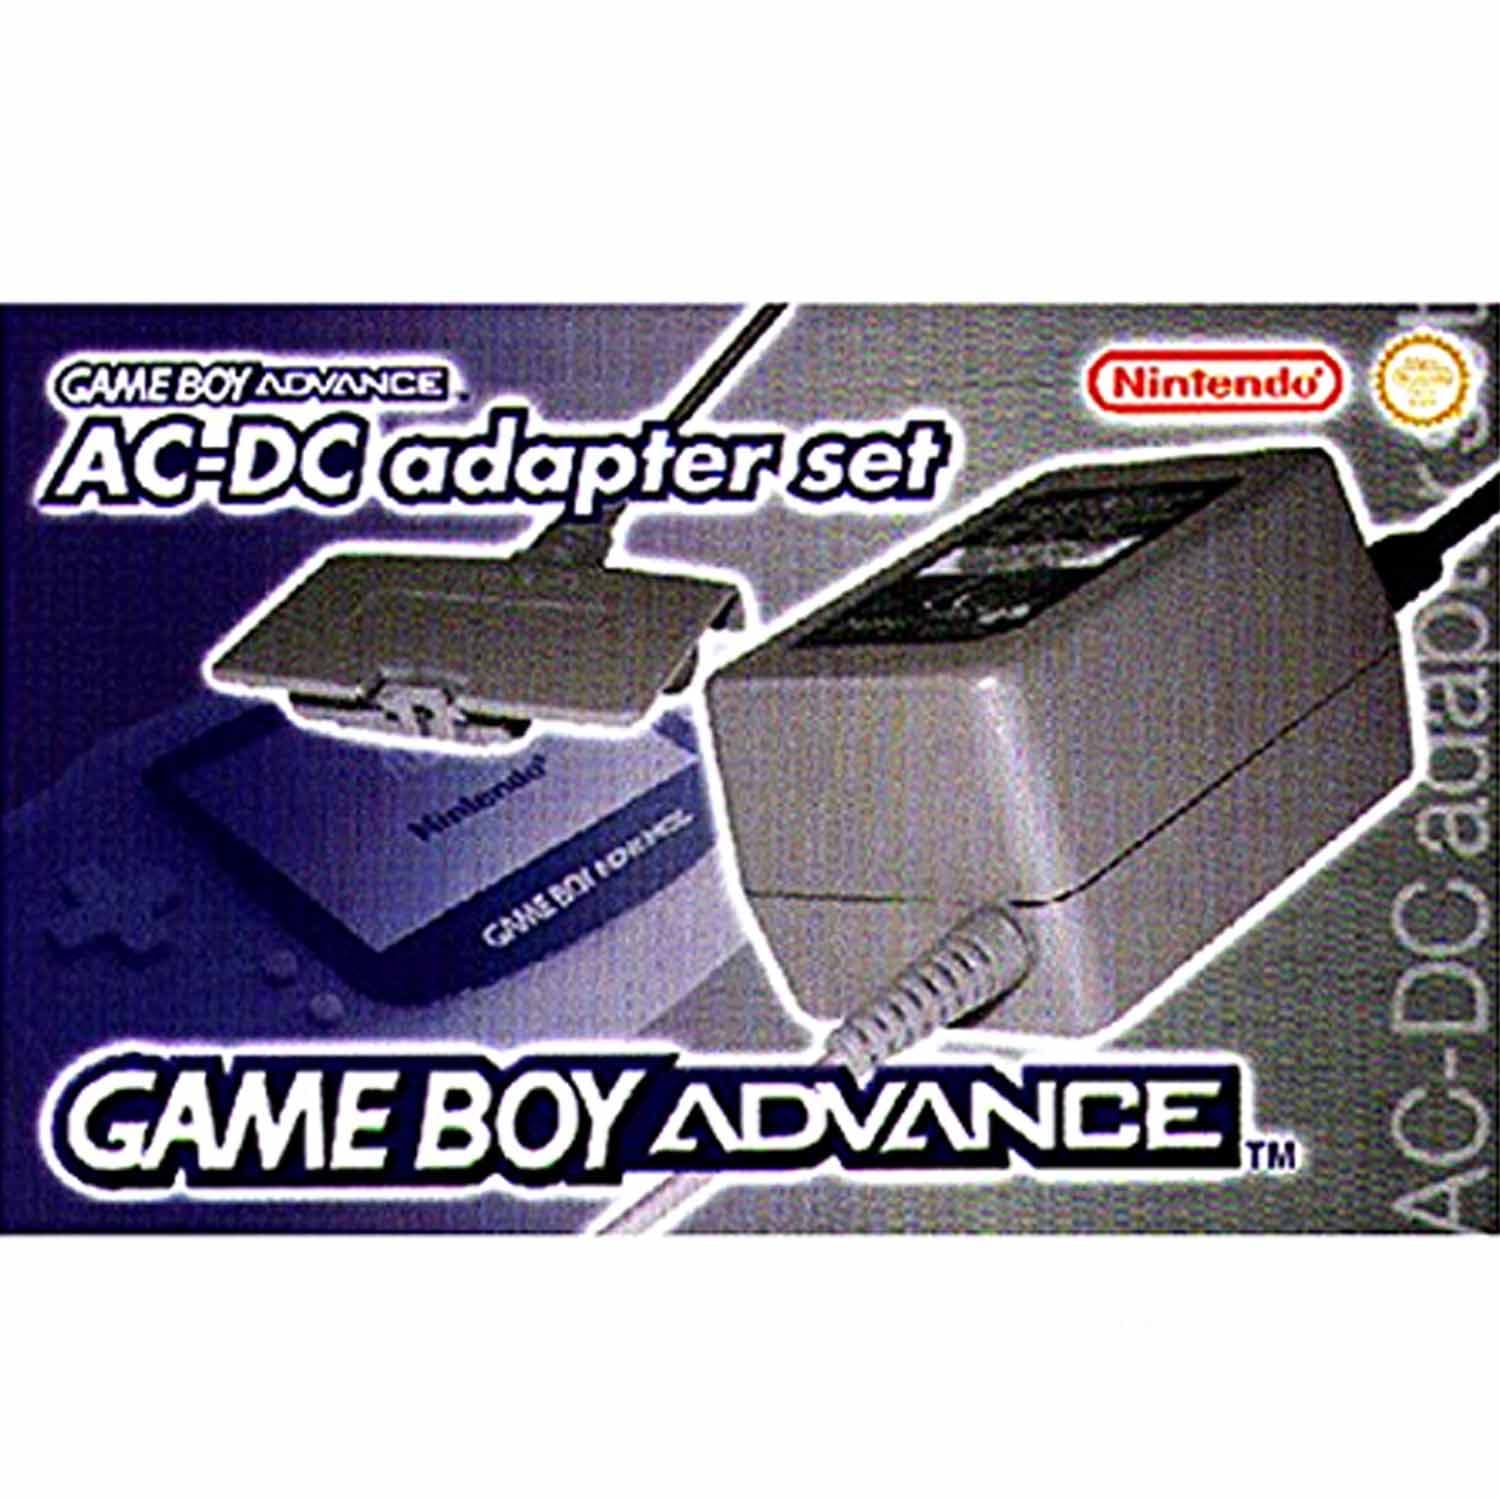 Game Boy Advance AC-DC Adapter Set